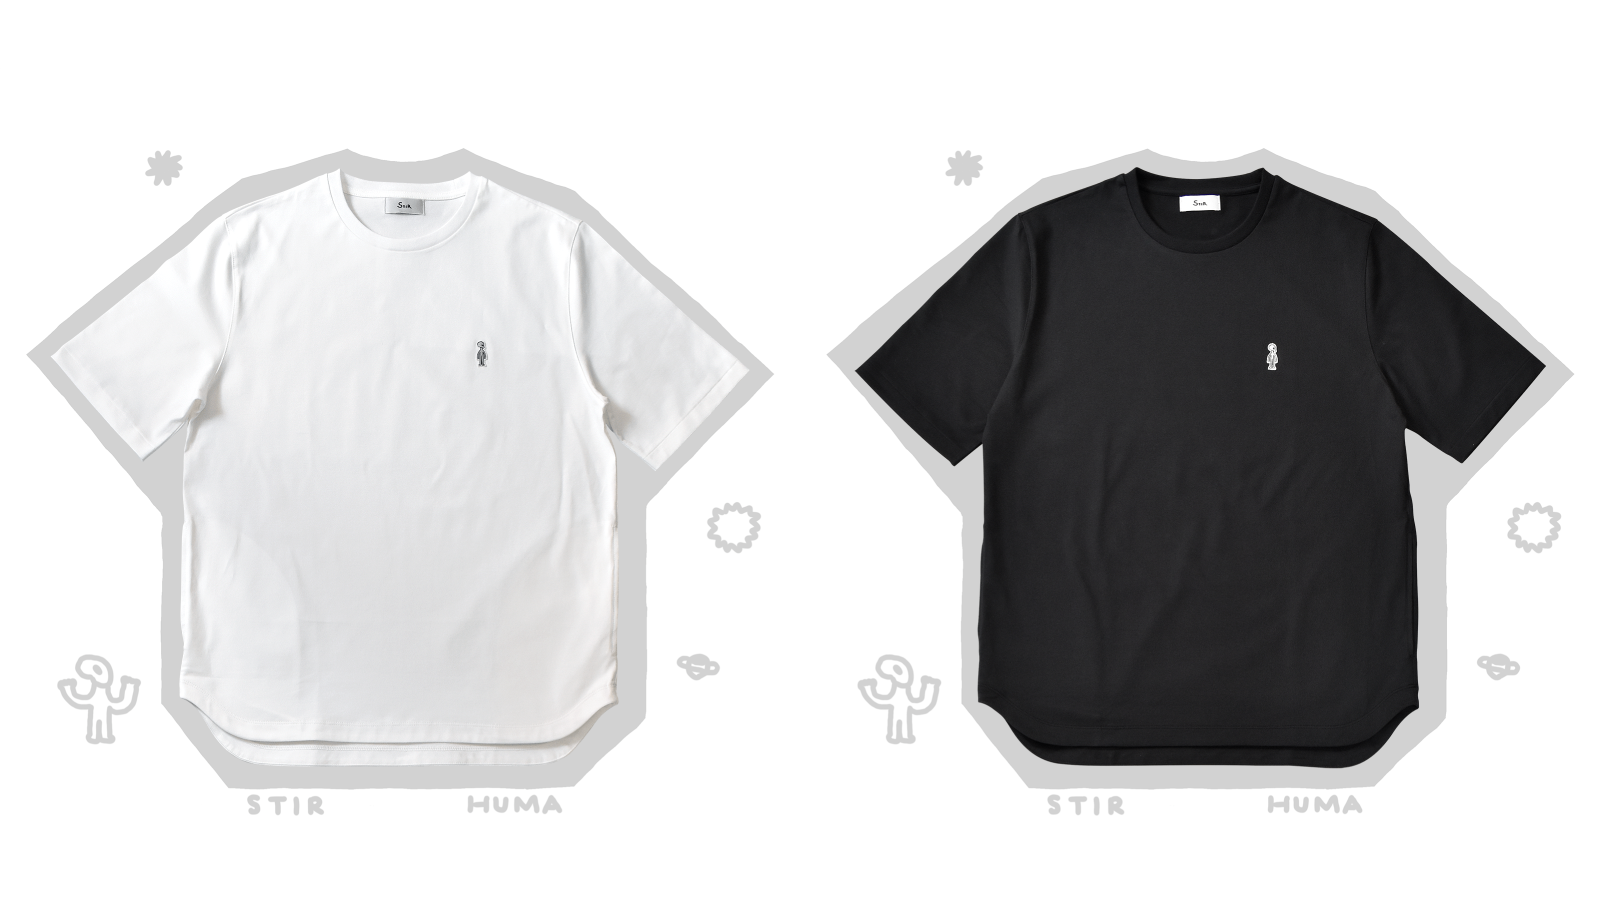 【NEW ITEM】HUMA DRESS T RELAX発売記念、ステッカープレゼントキャンペーン